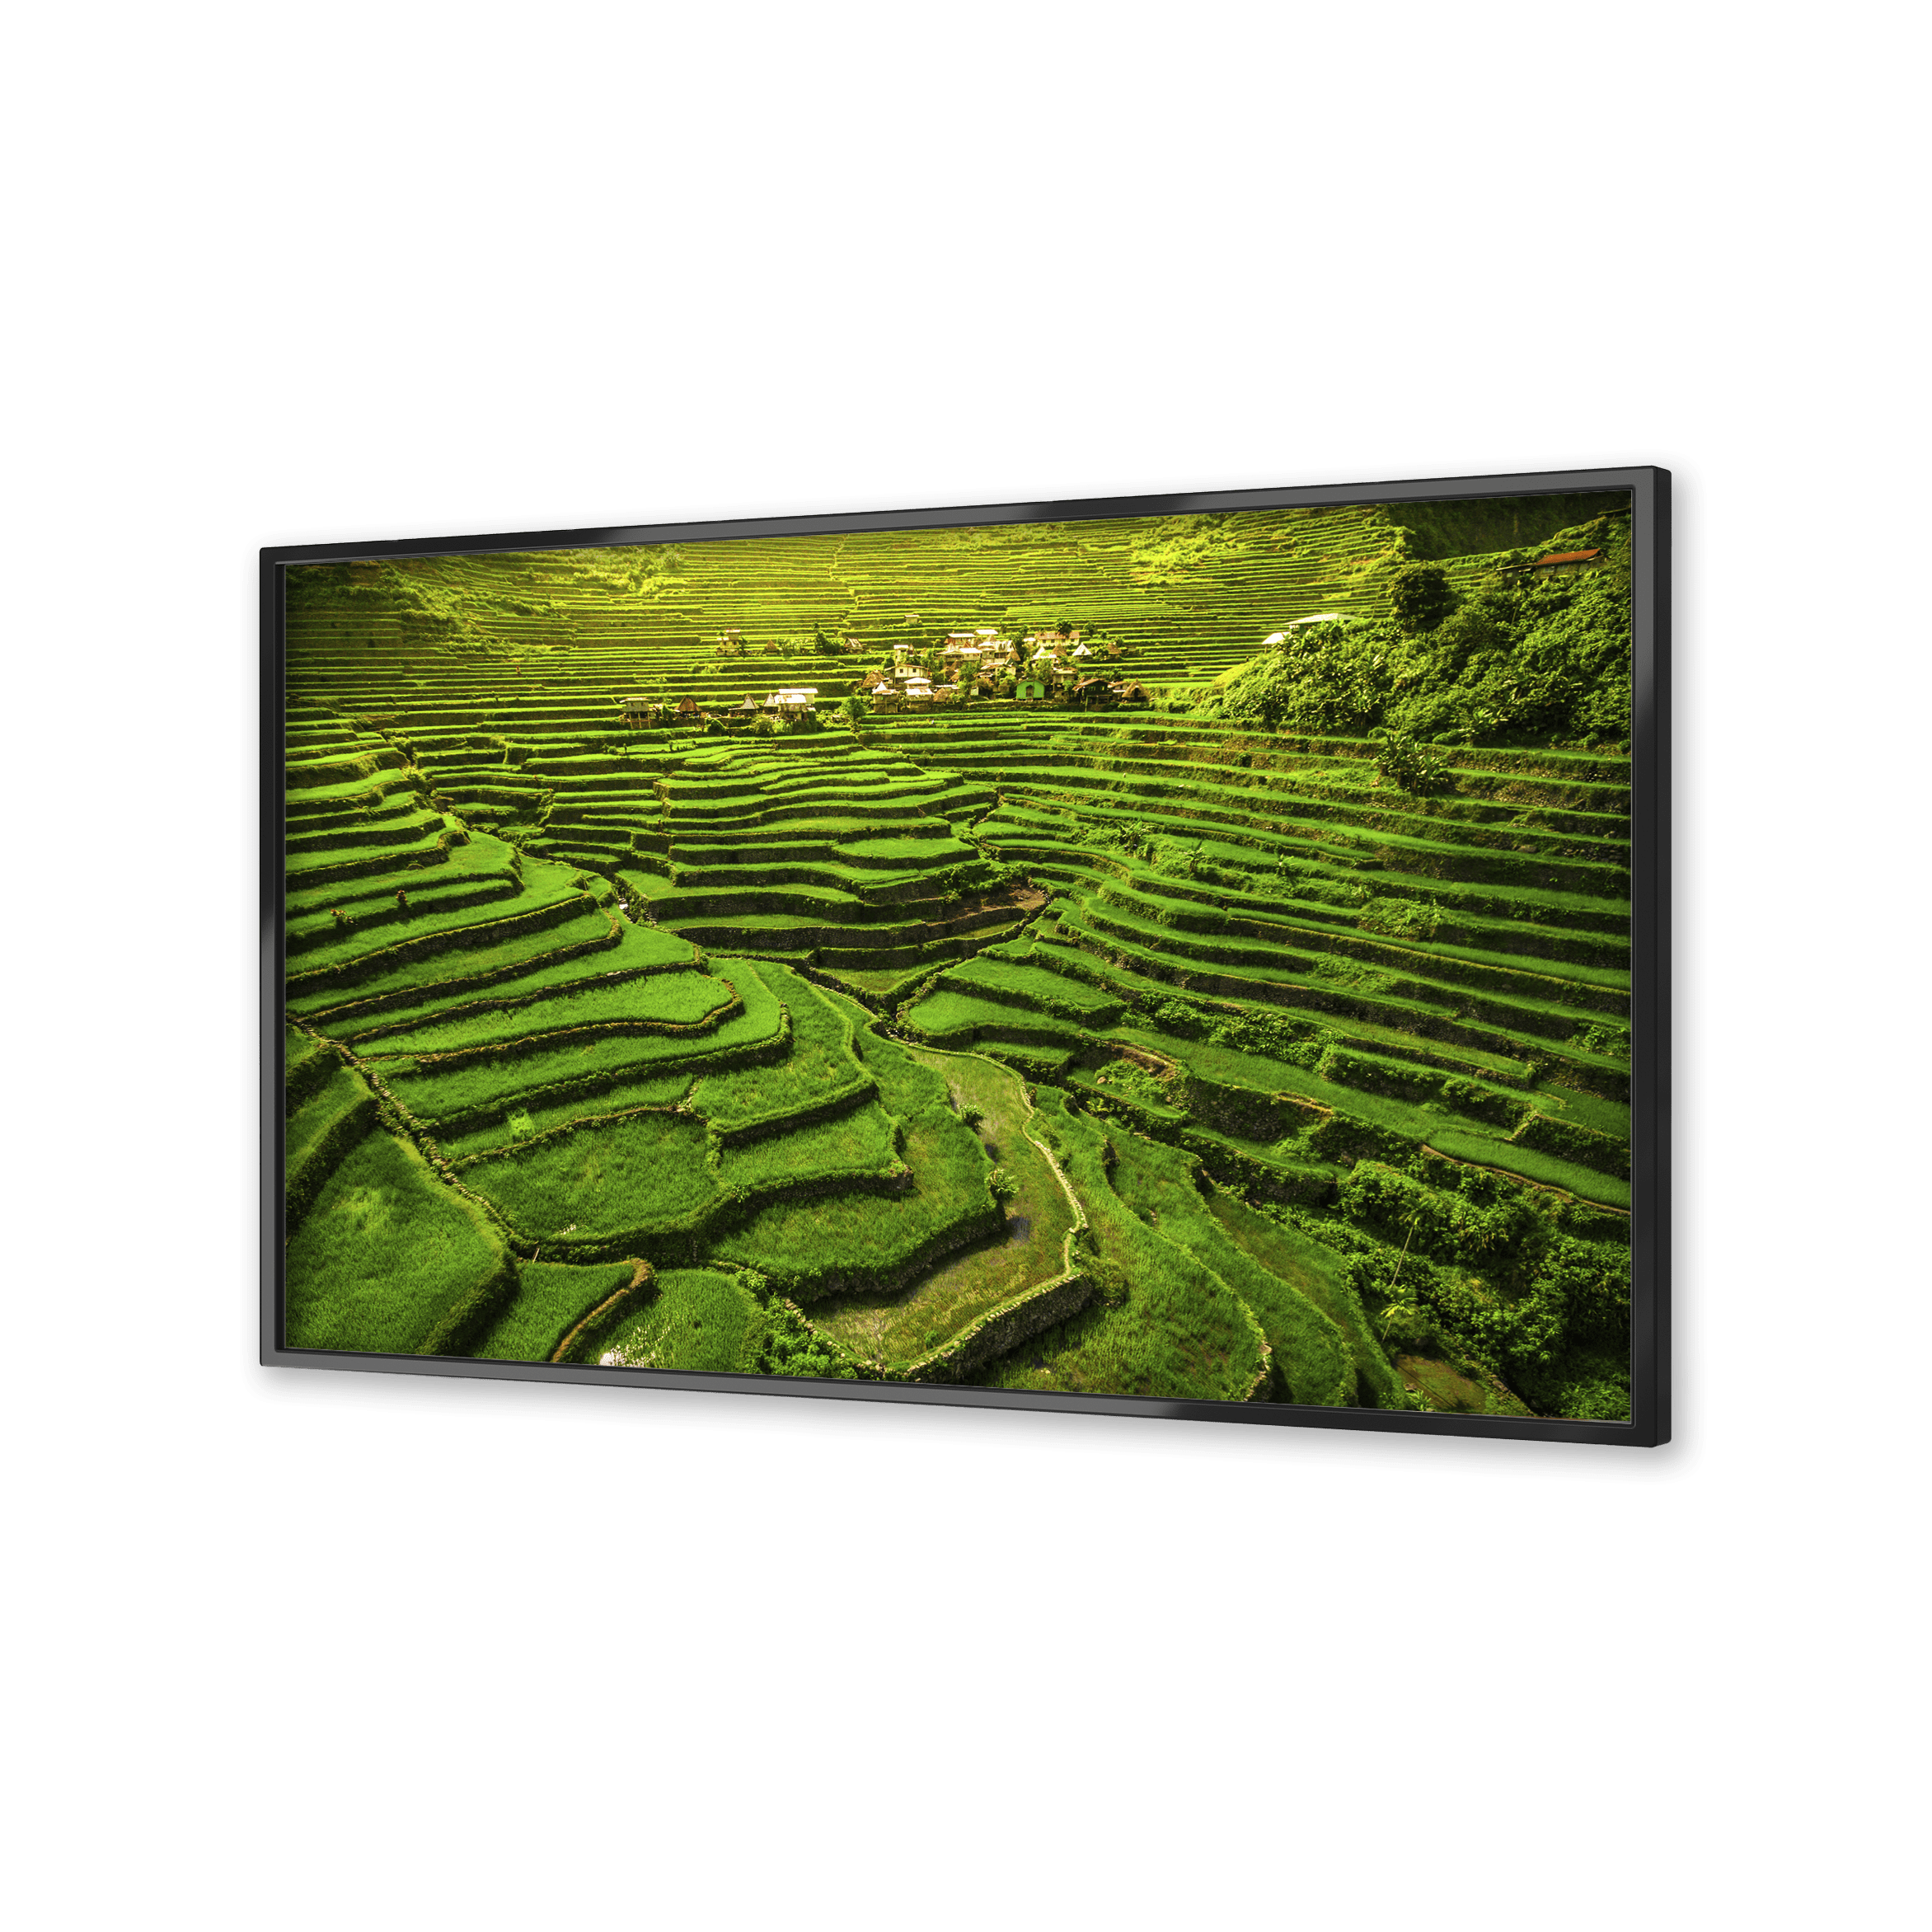 Image of terraced rice fields on a flatscreen TV